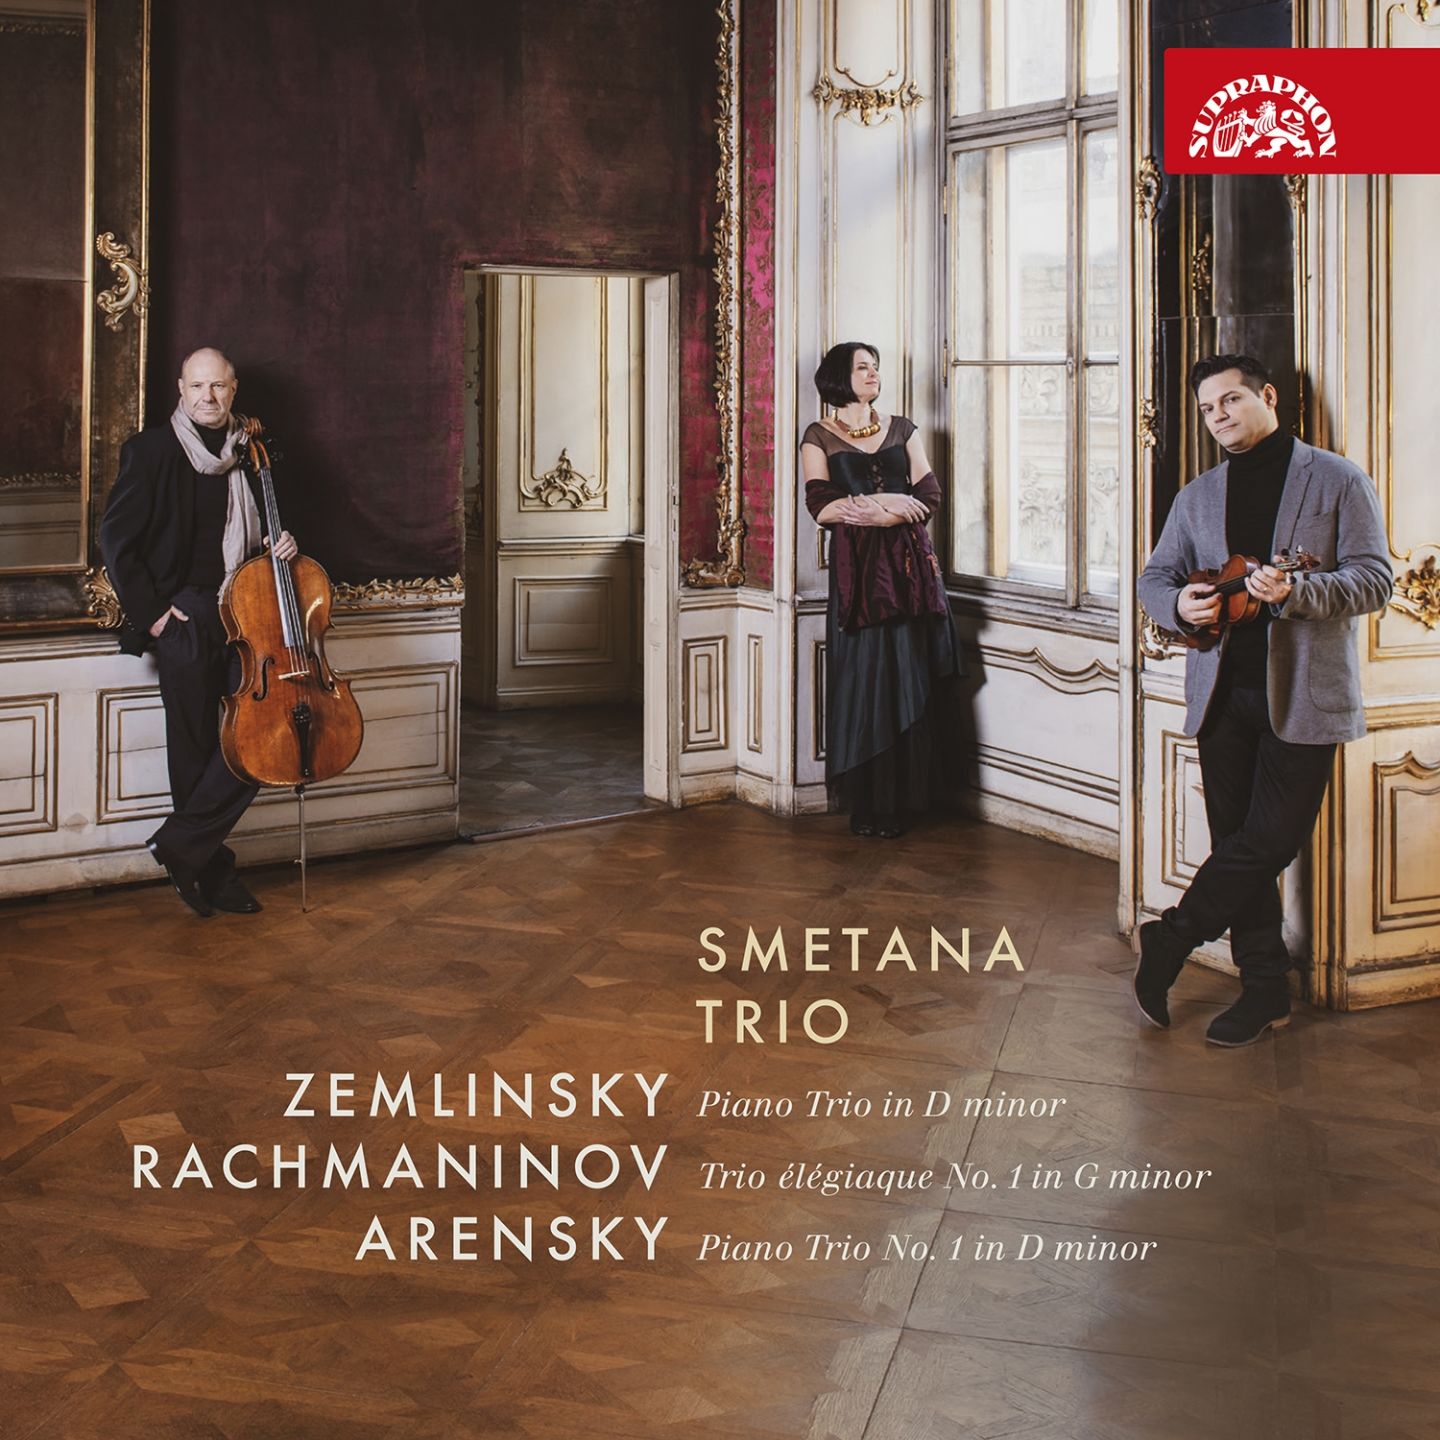 Smetana Trio – Zemlinsky, Rachmaninov, Arensky – Piano Trios